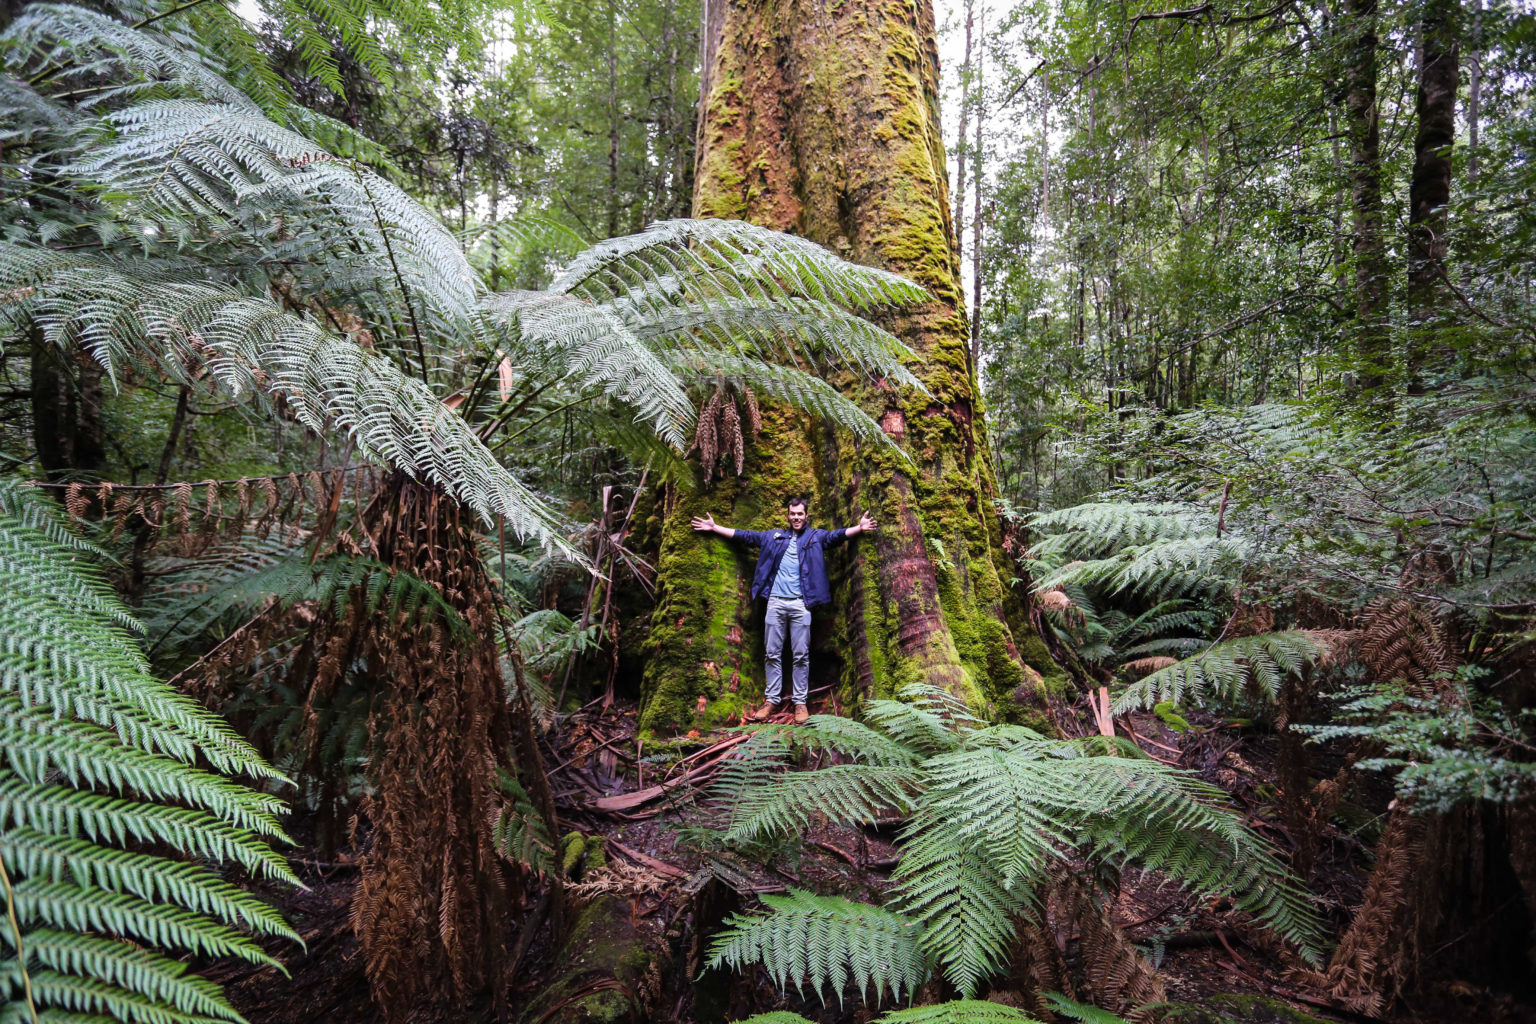 Styx Big Tree Reserve. Image Credit: Tourism Australia & Graham Freeman